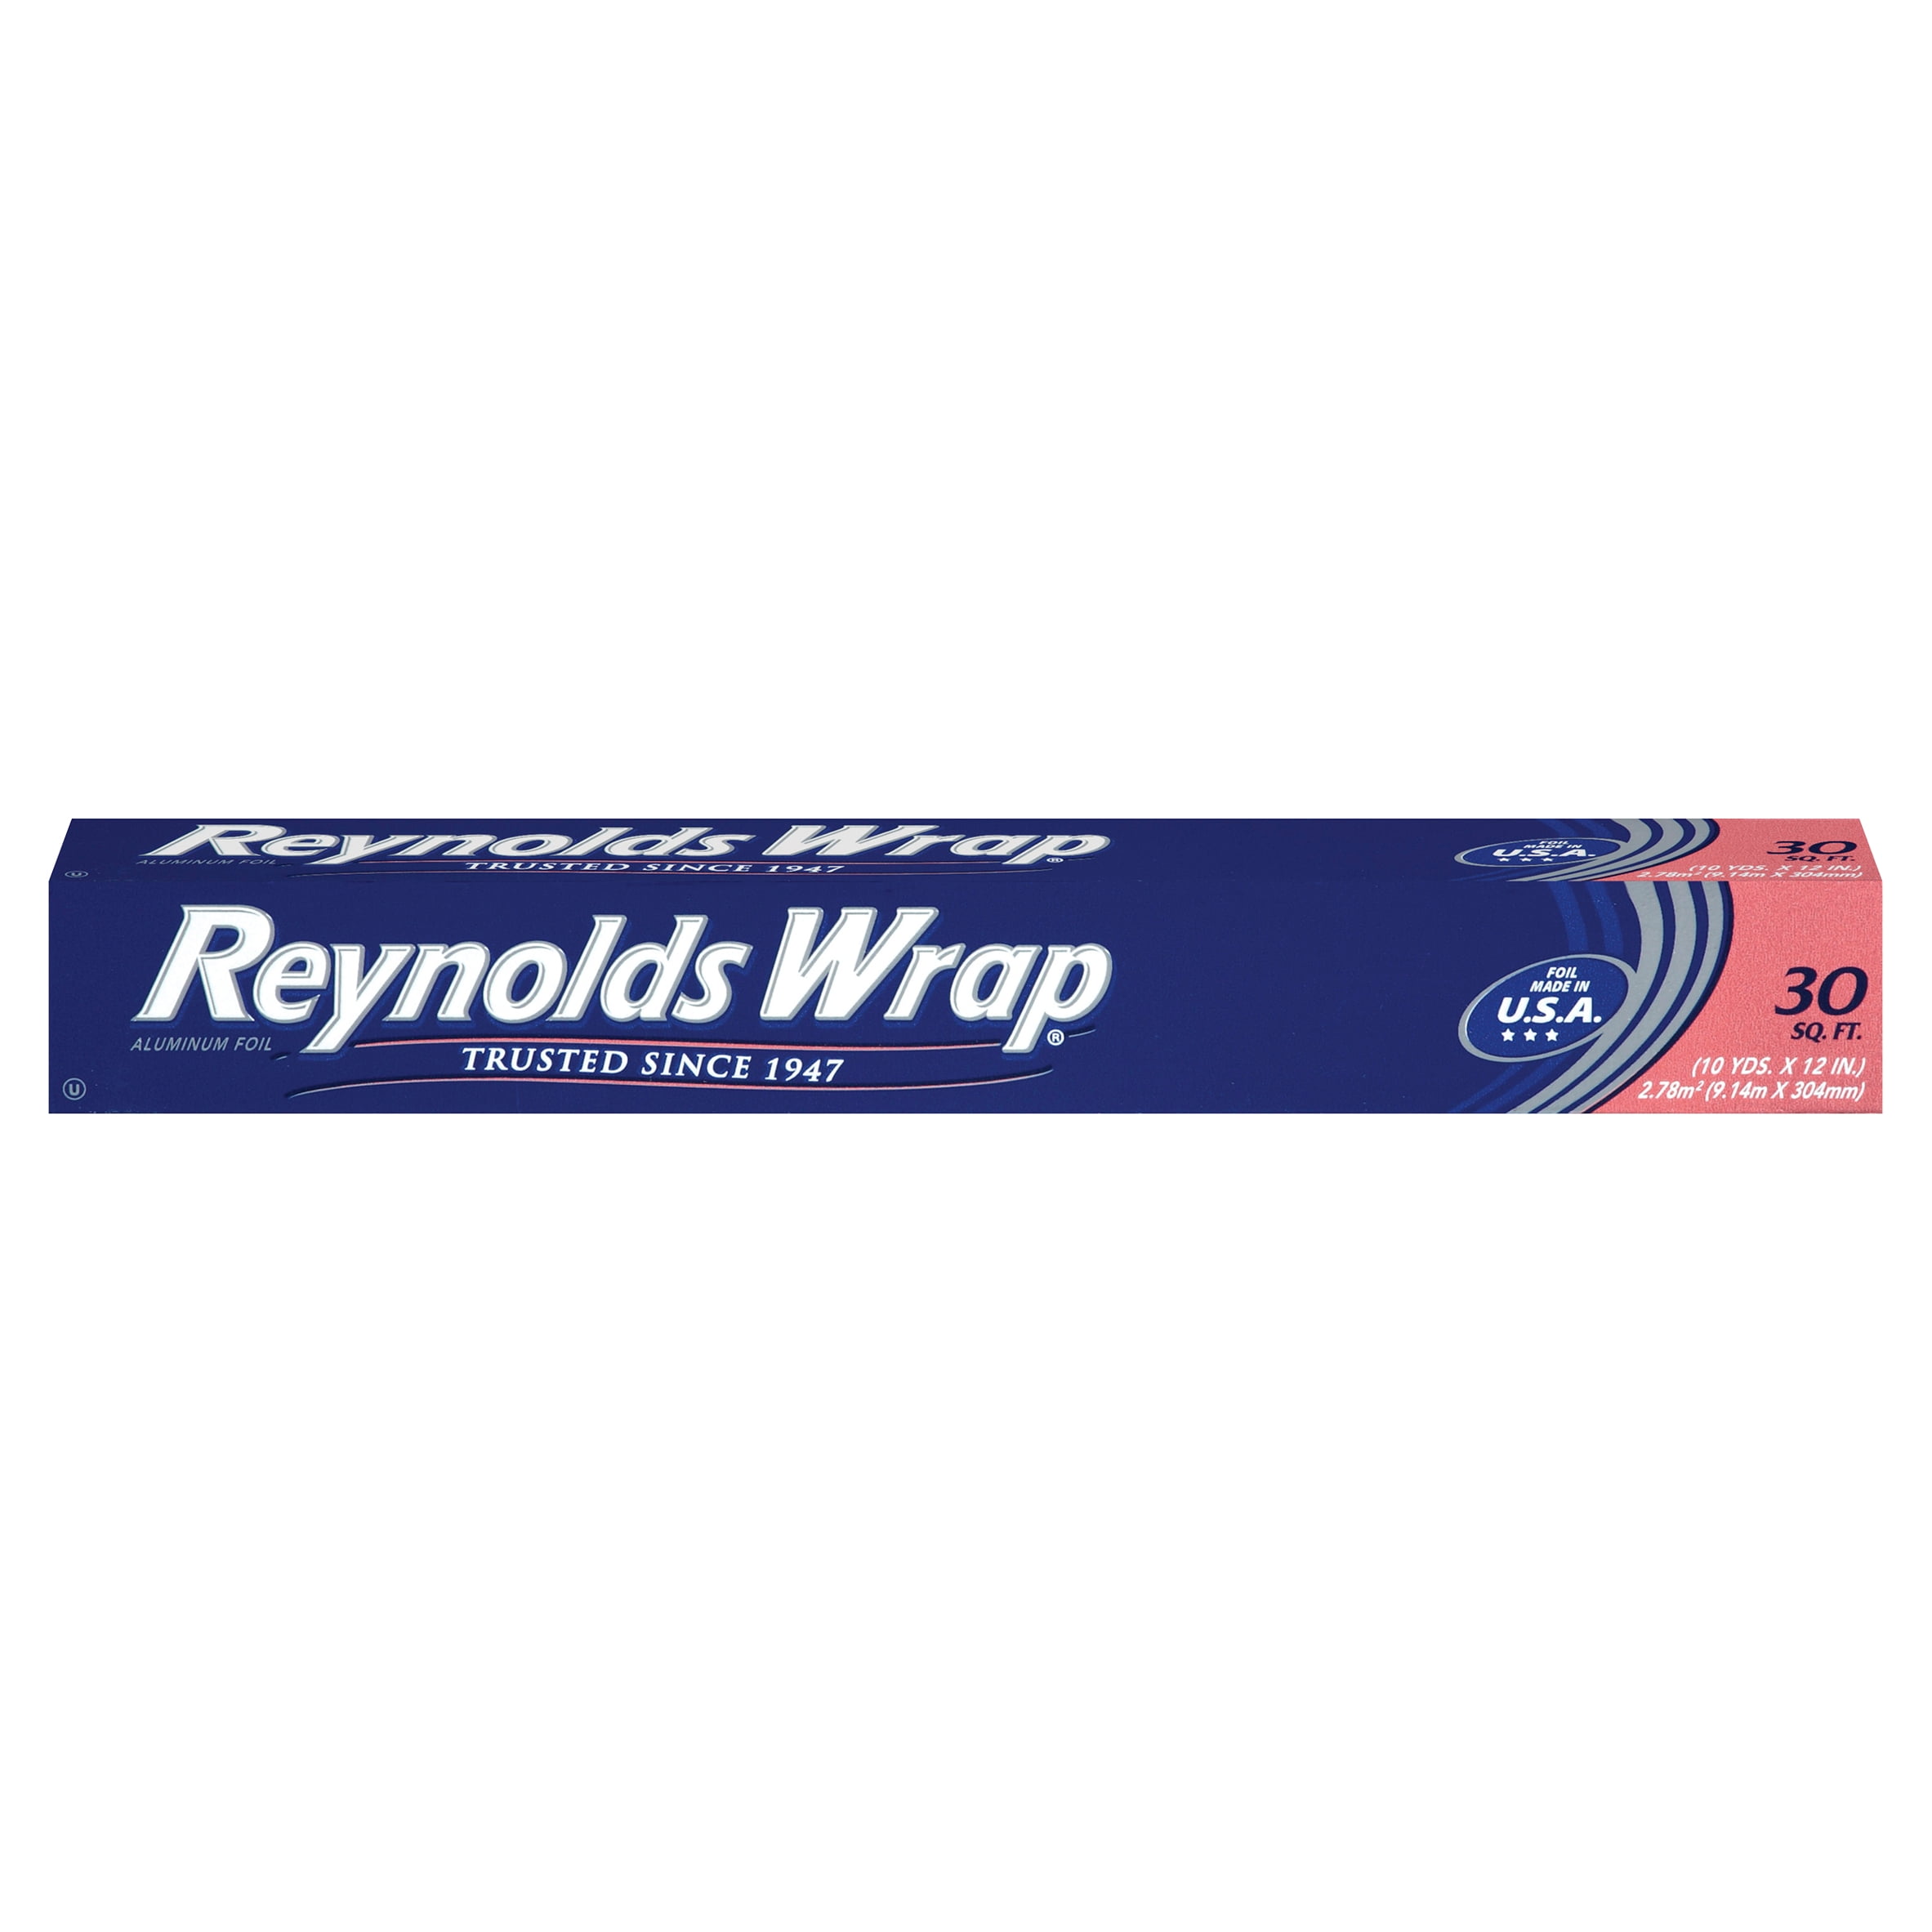 200 Square Foot Roll, 1 Pack Reynolds Wrap Aluminum Foil